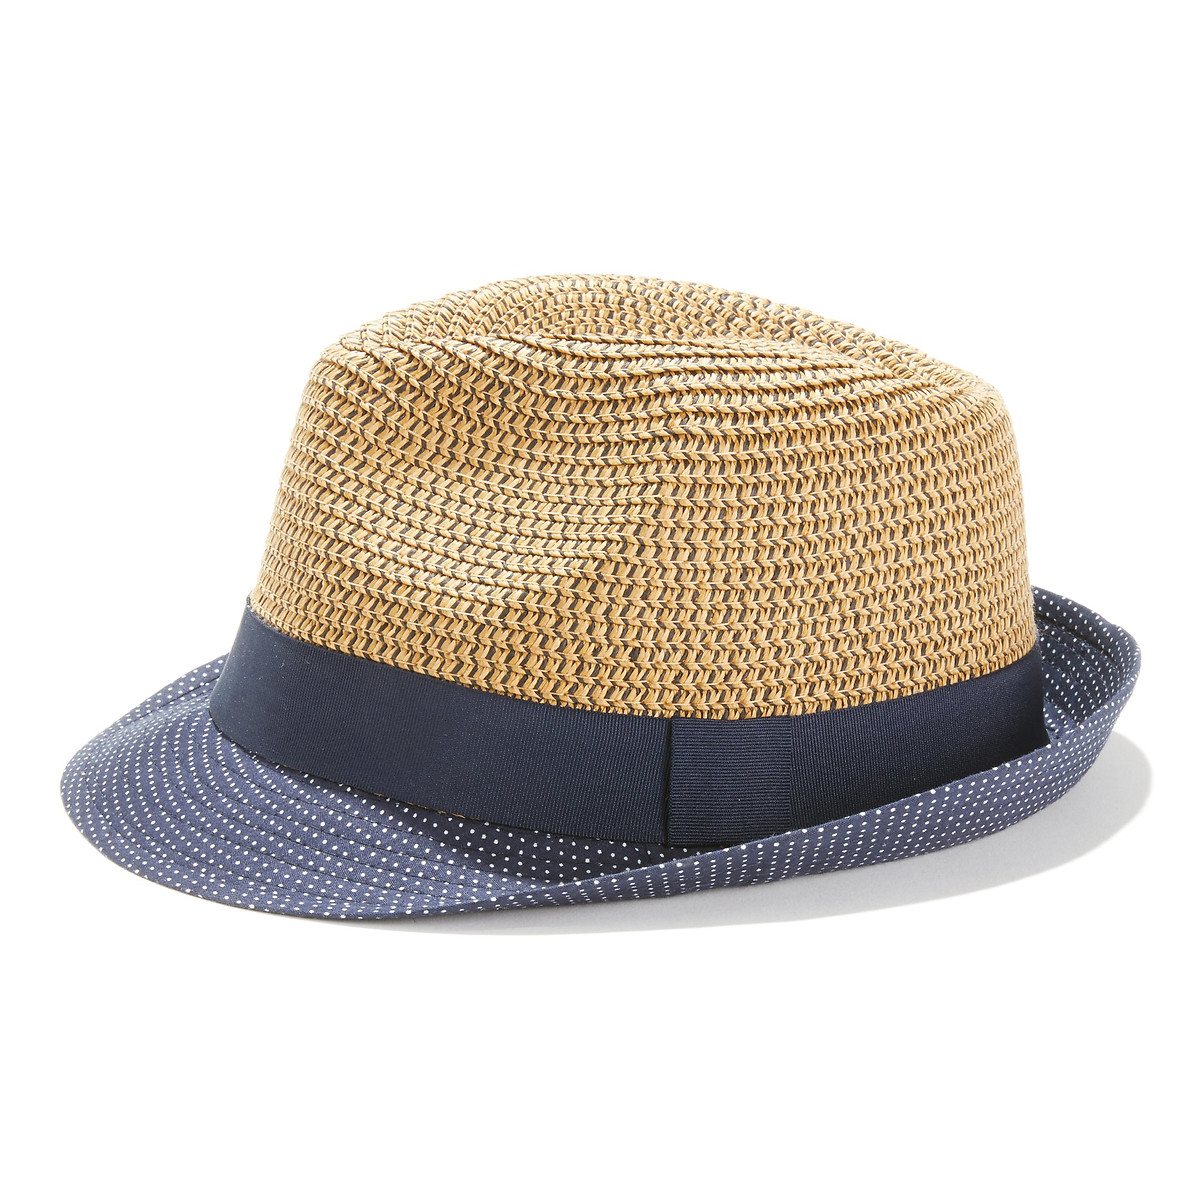 Шляпа La Redoute С тесьмой M/L бежевый, размер M/L